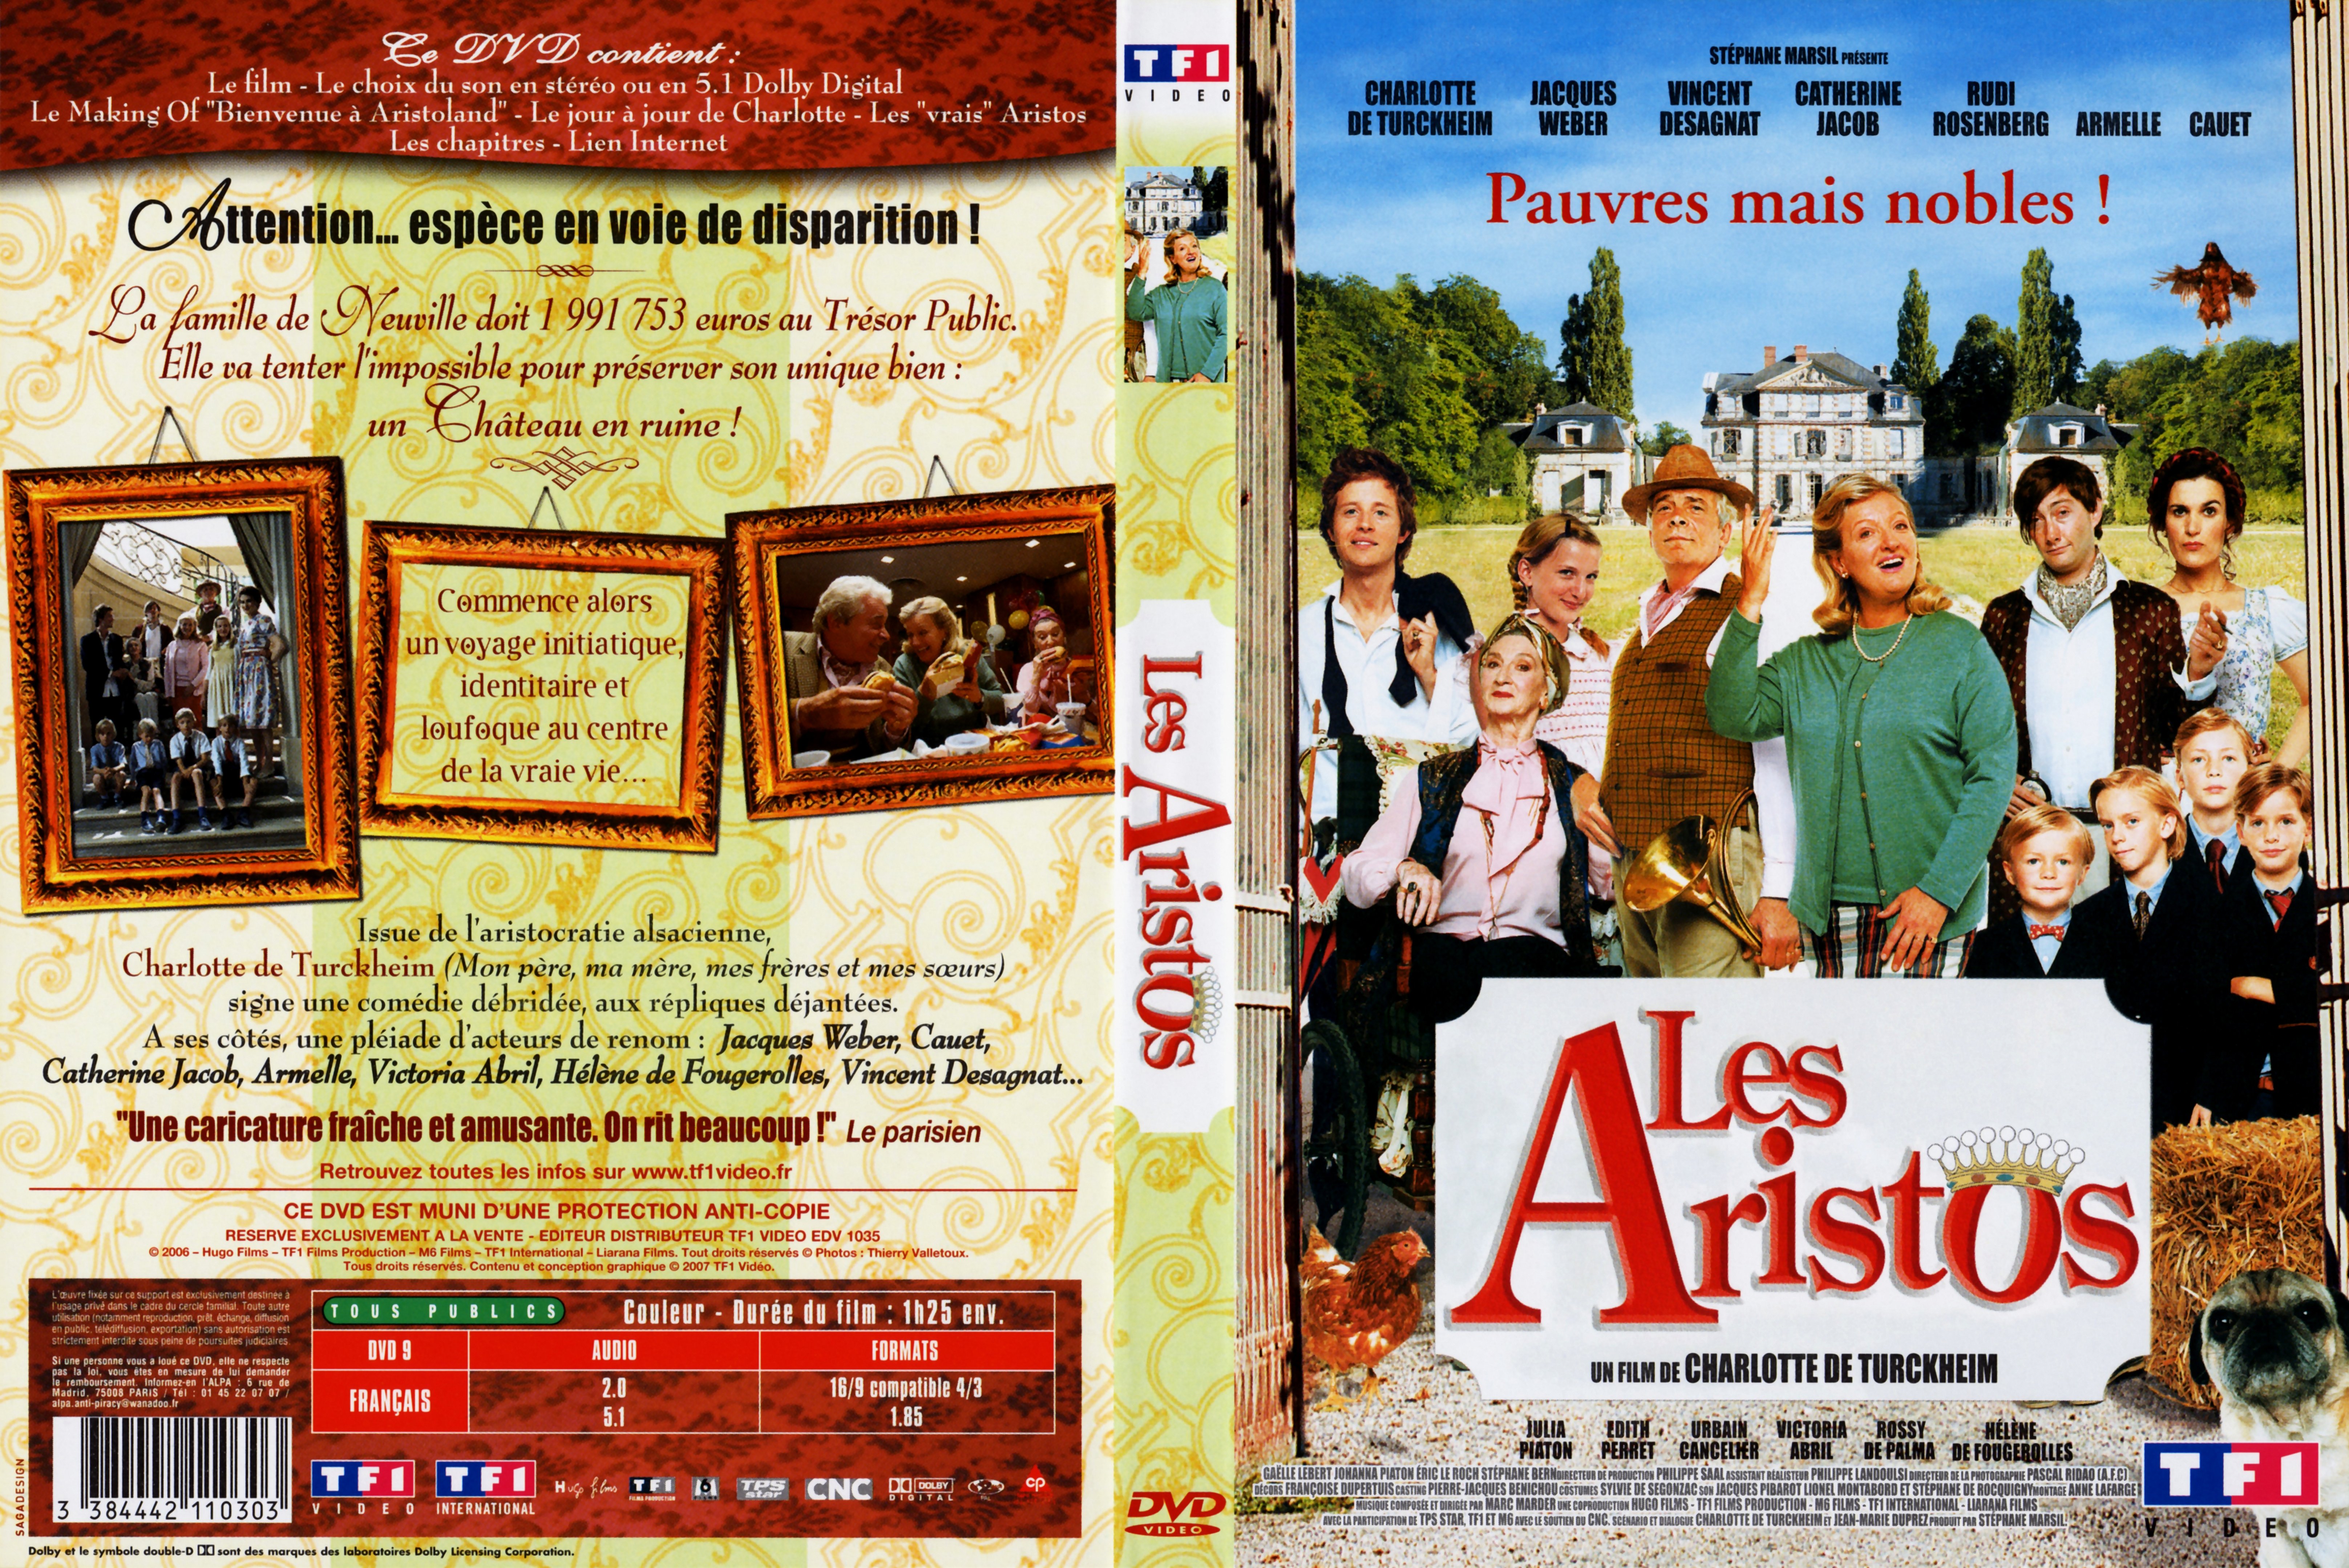 Jaquette DVD Les aristos v3